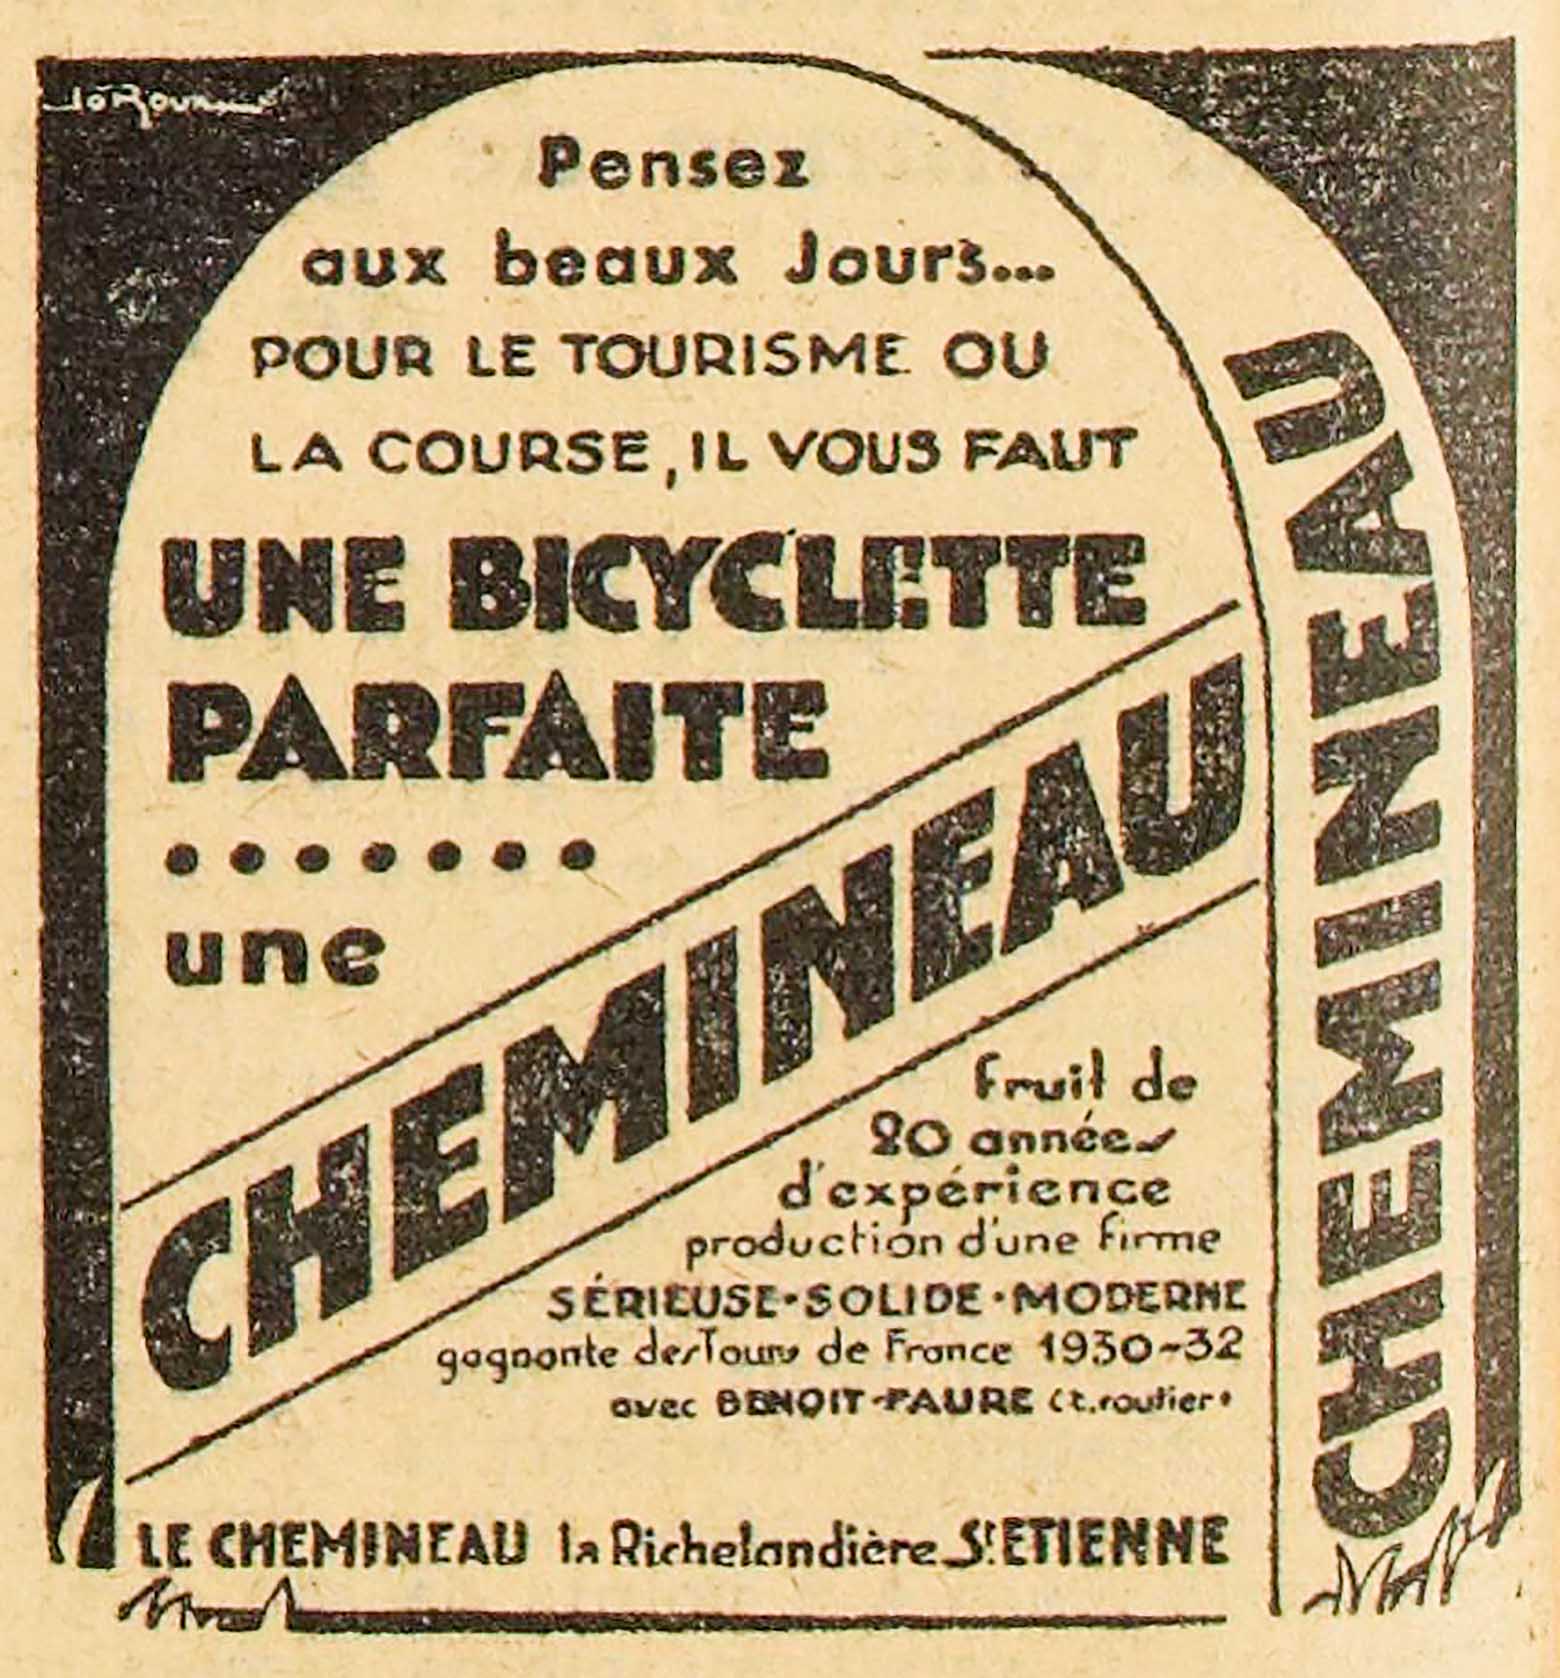 L'Auto 29th April 1935 - Chemineau advert main image